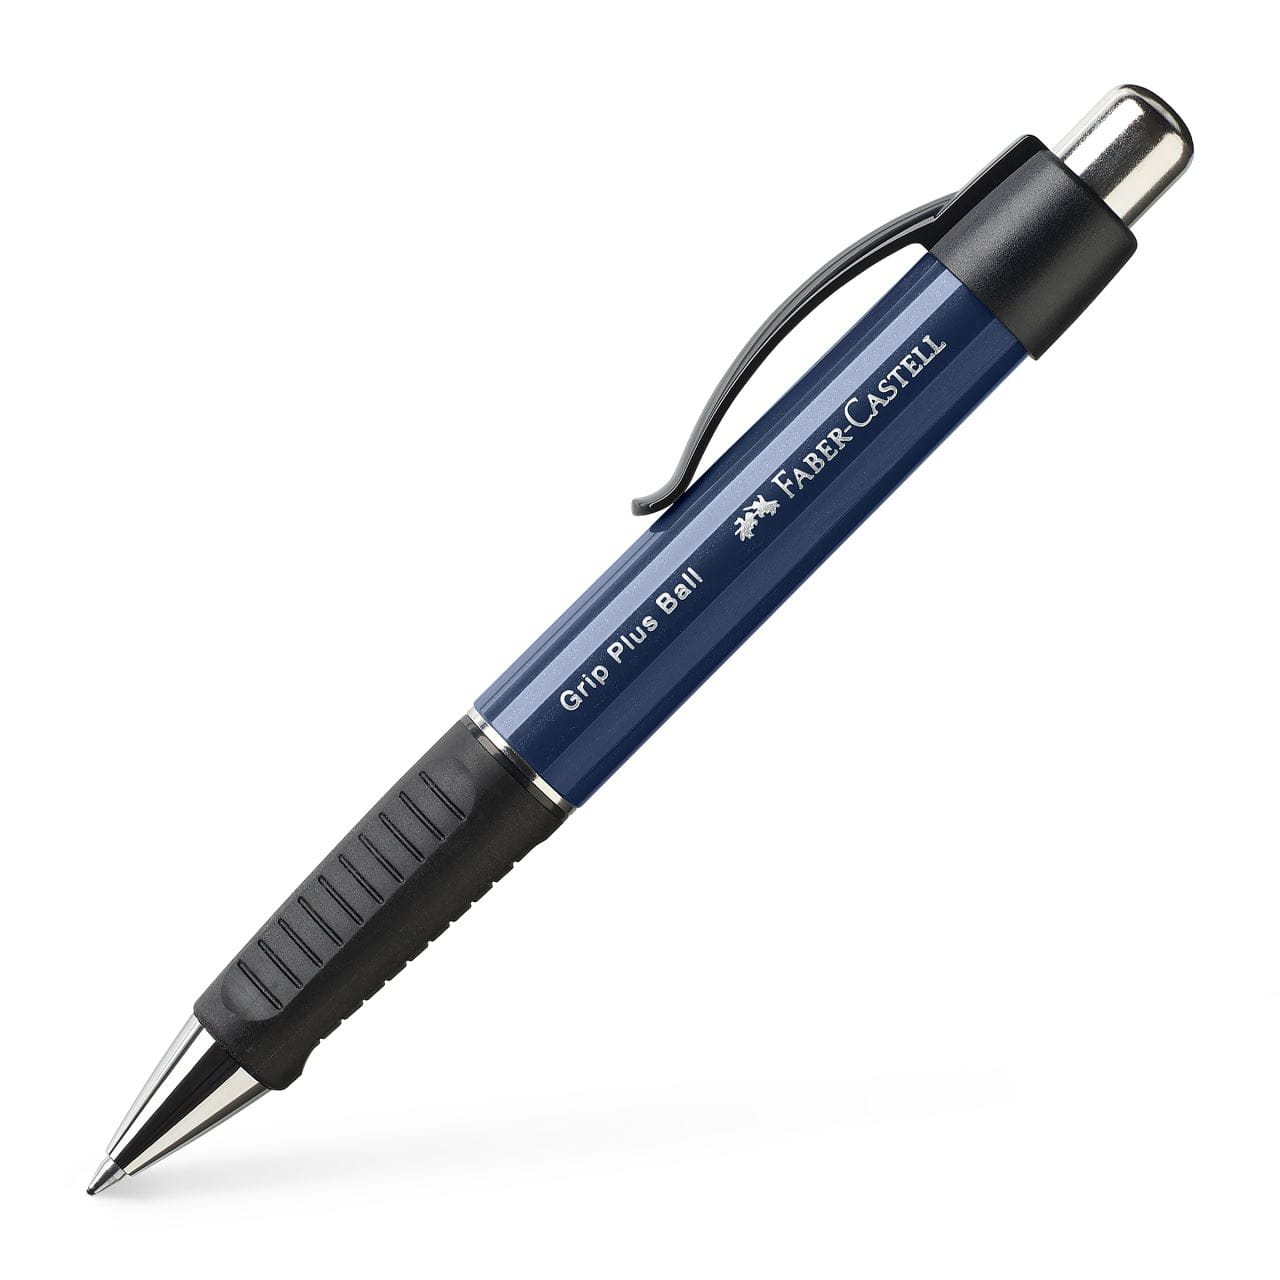 Faber-Castell - Στυλό διαρκείας Grip Plus, μπλε